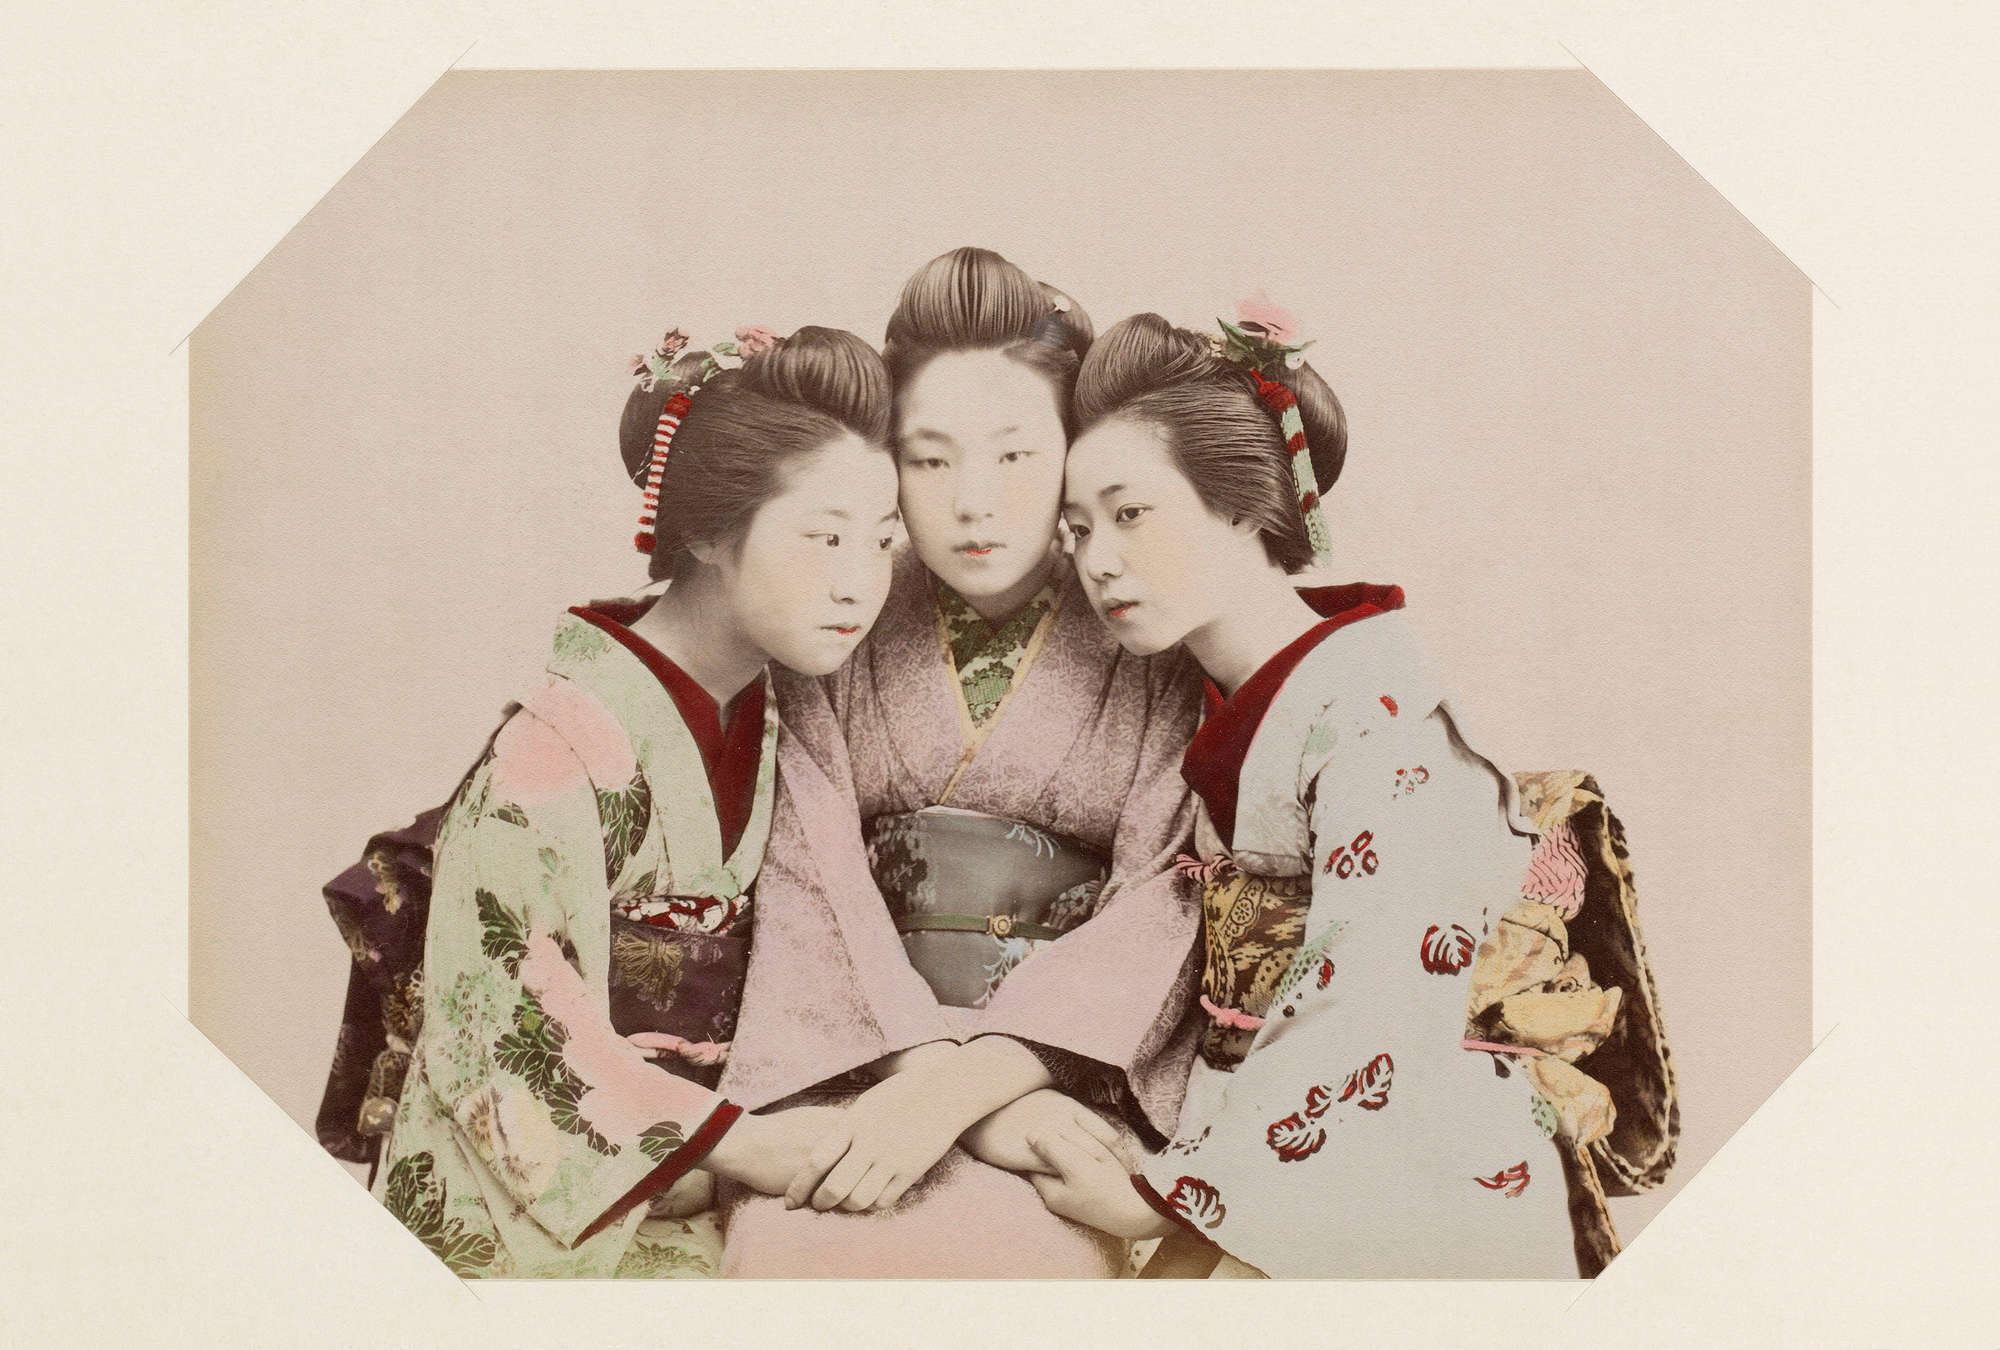             Kyoto 1 - Vintage Geisha Portret behang met fotolijst
        